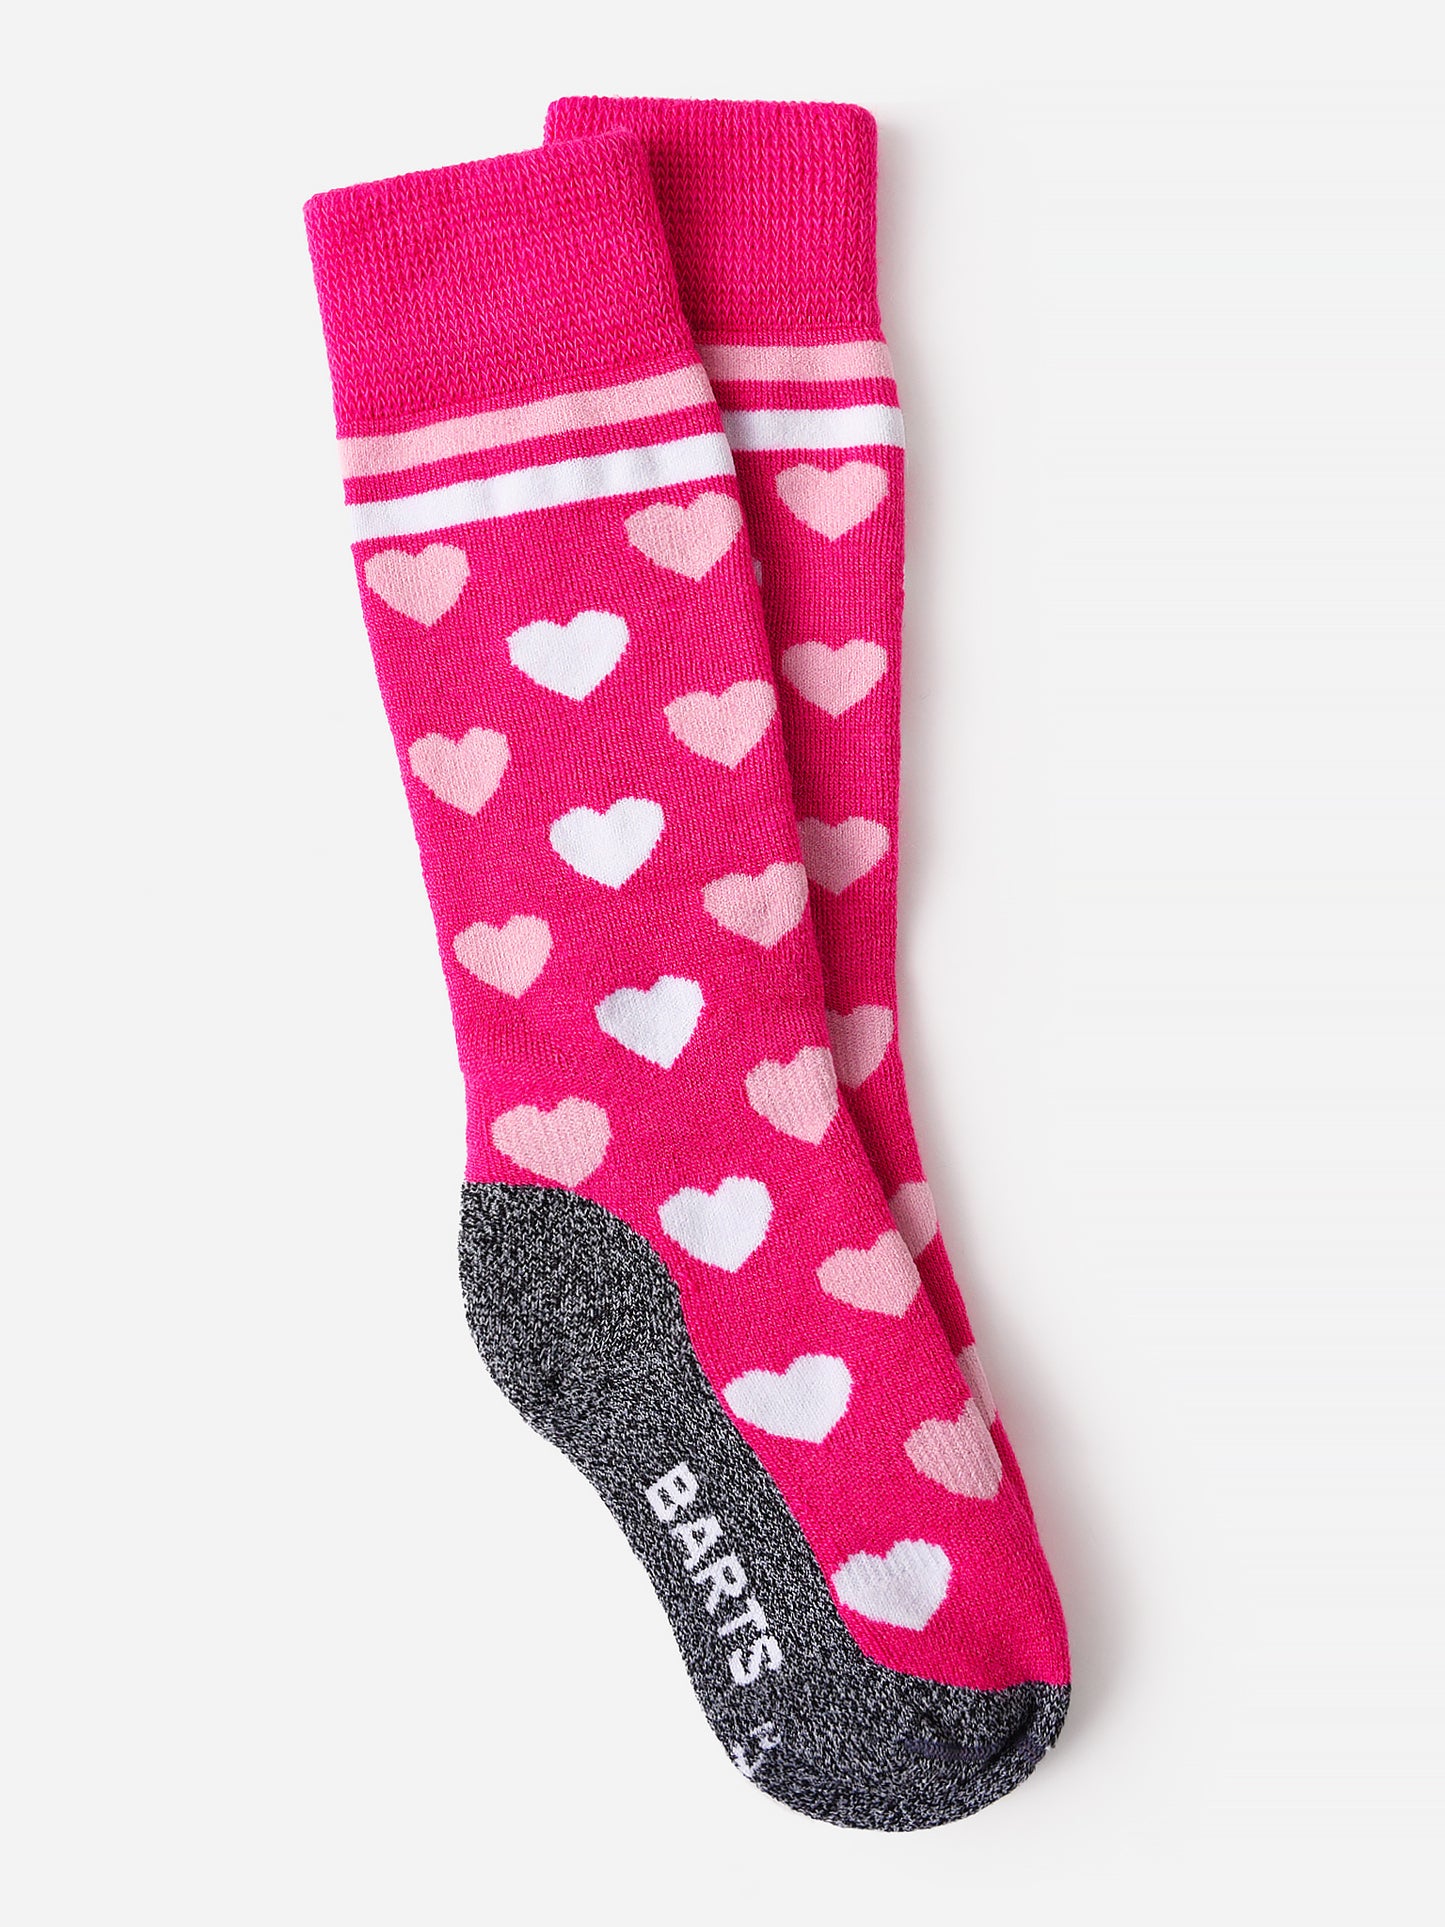 Barts Girls' Hearts Ski Socks